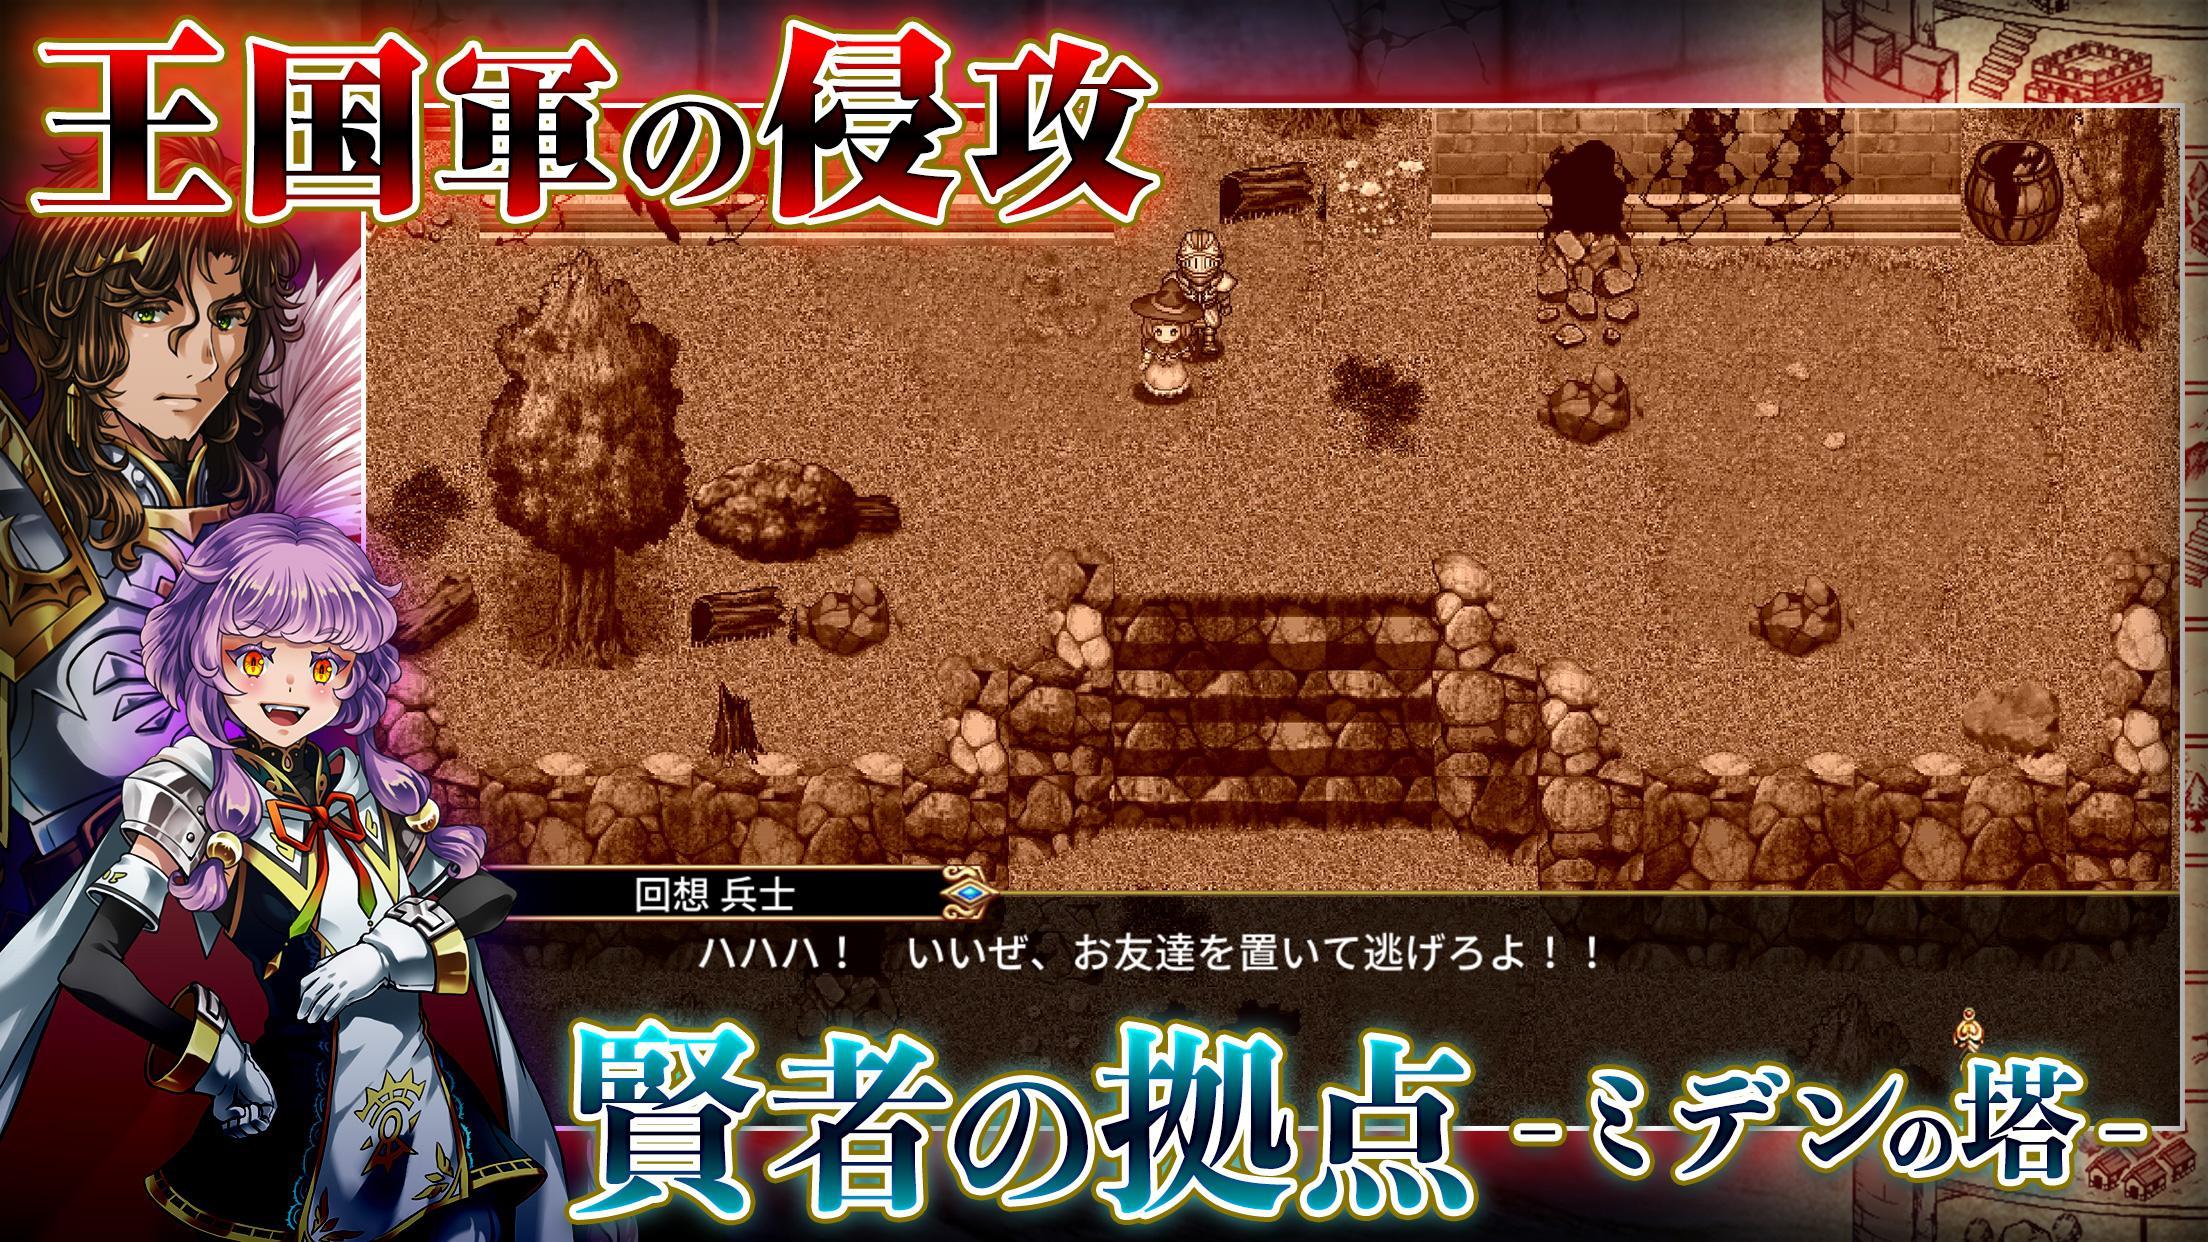 Screenshot 1 of RPG Miden Tower 